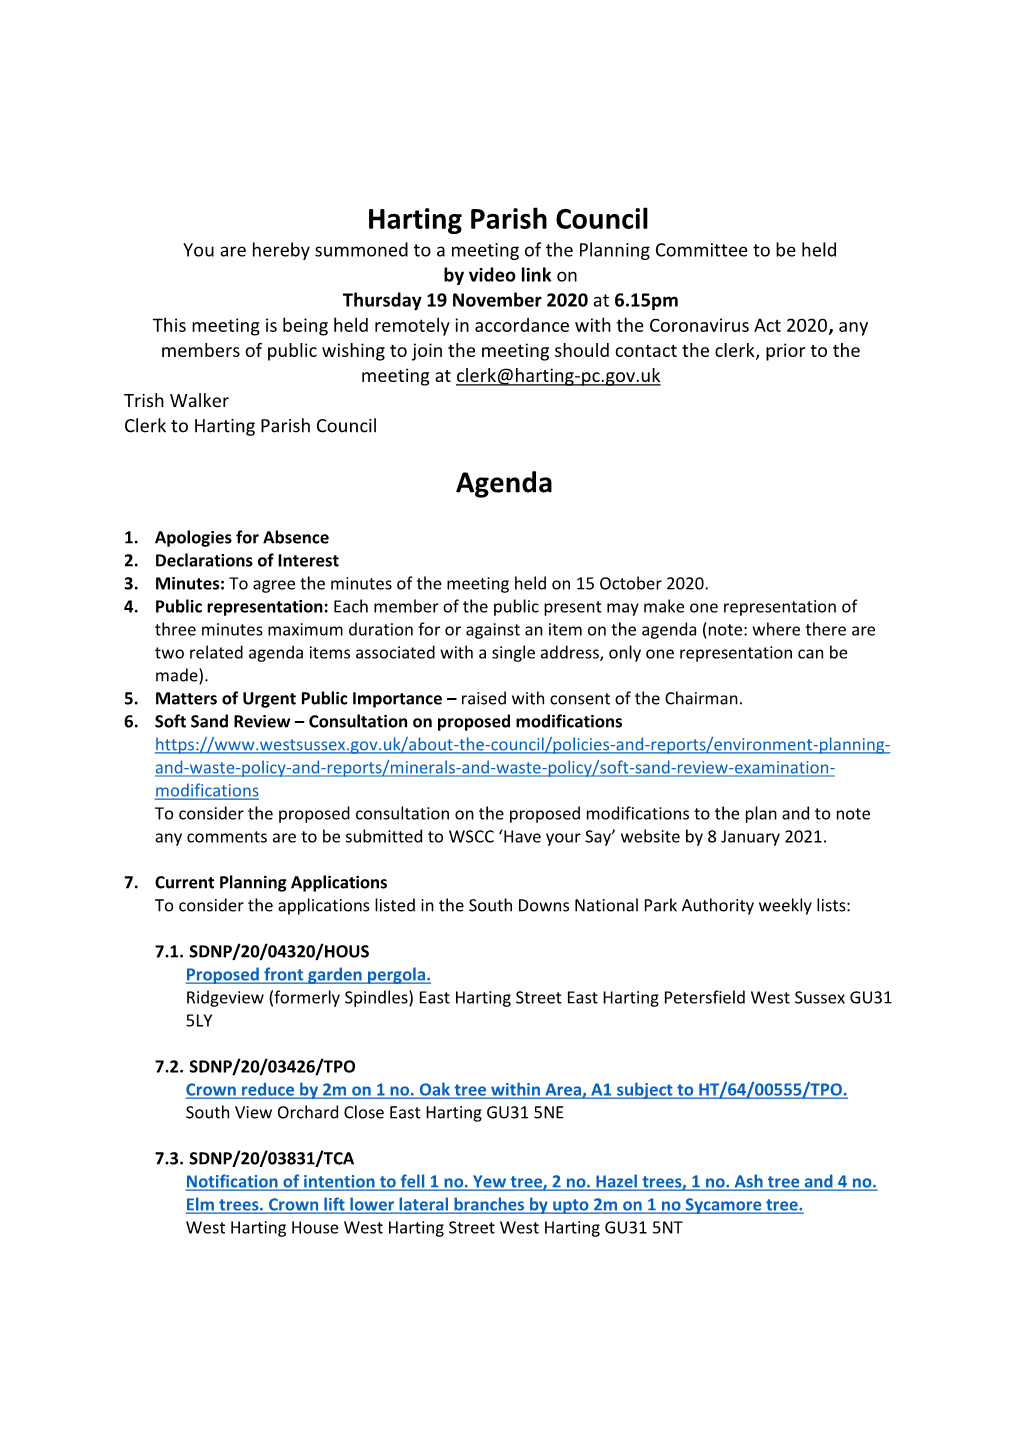 Harting Parish Council Agenda